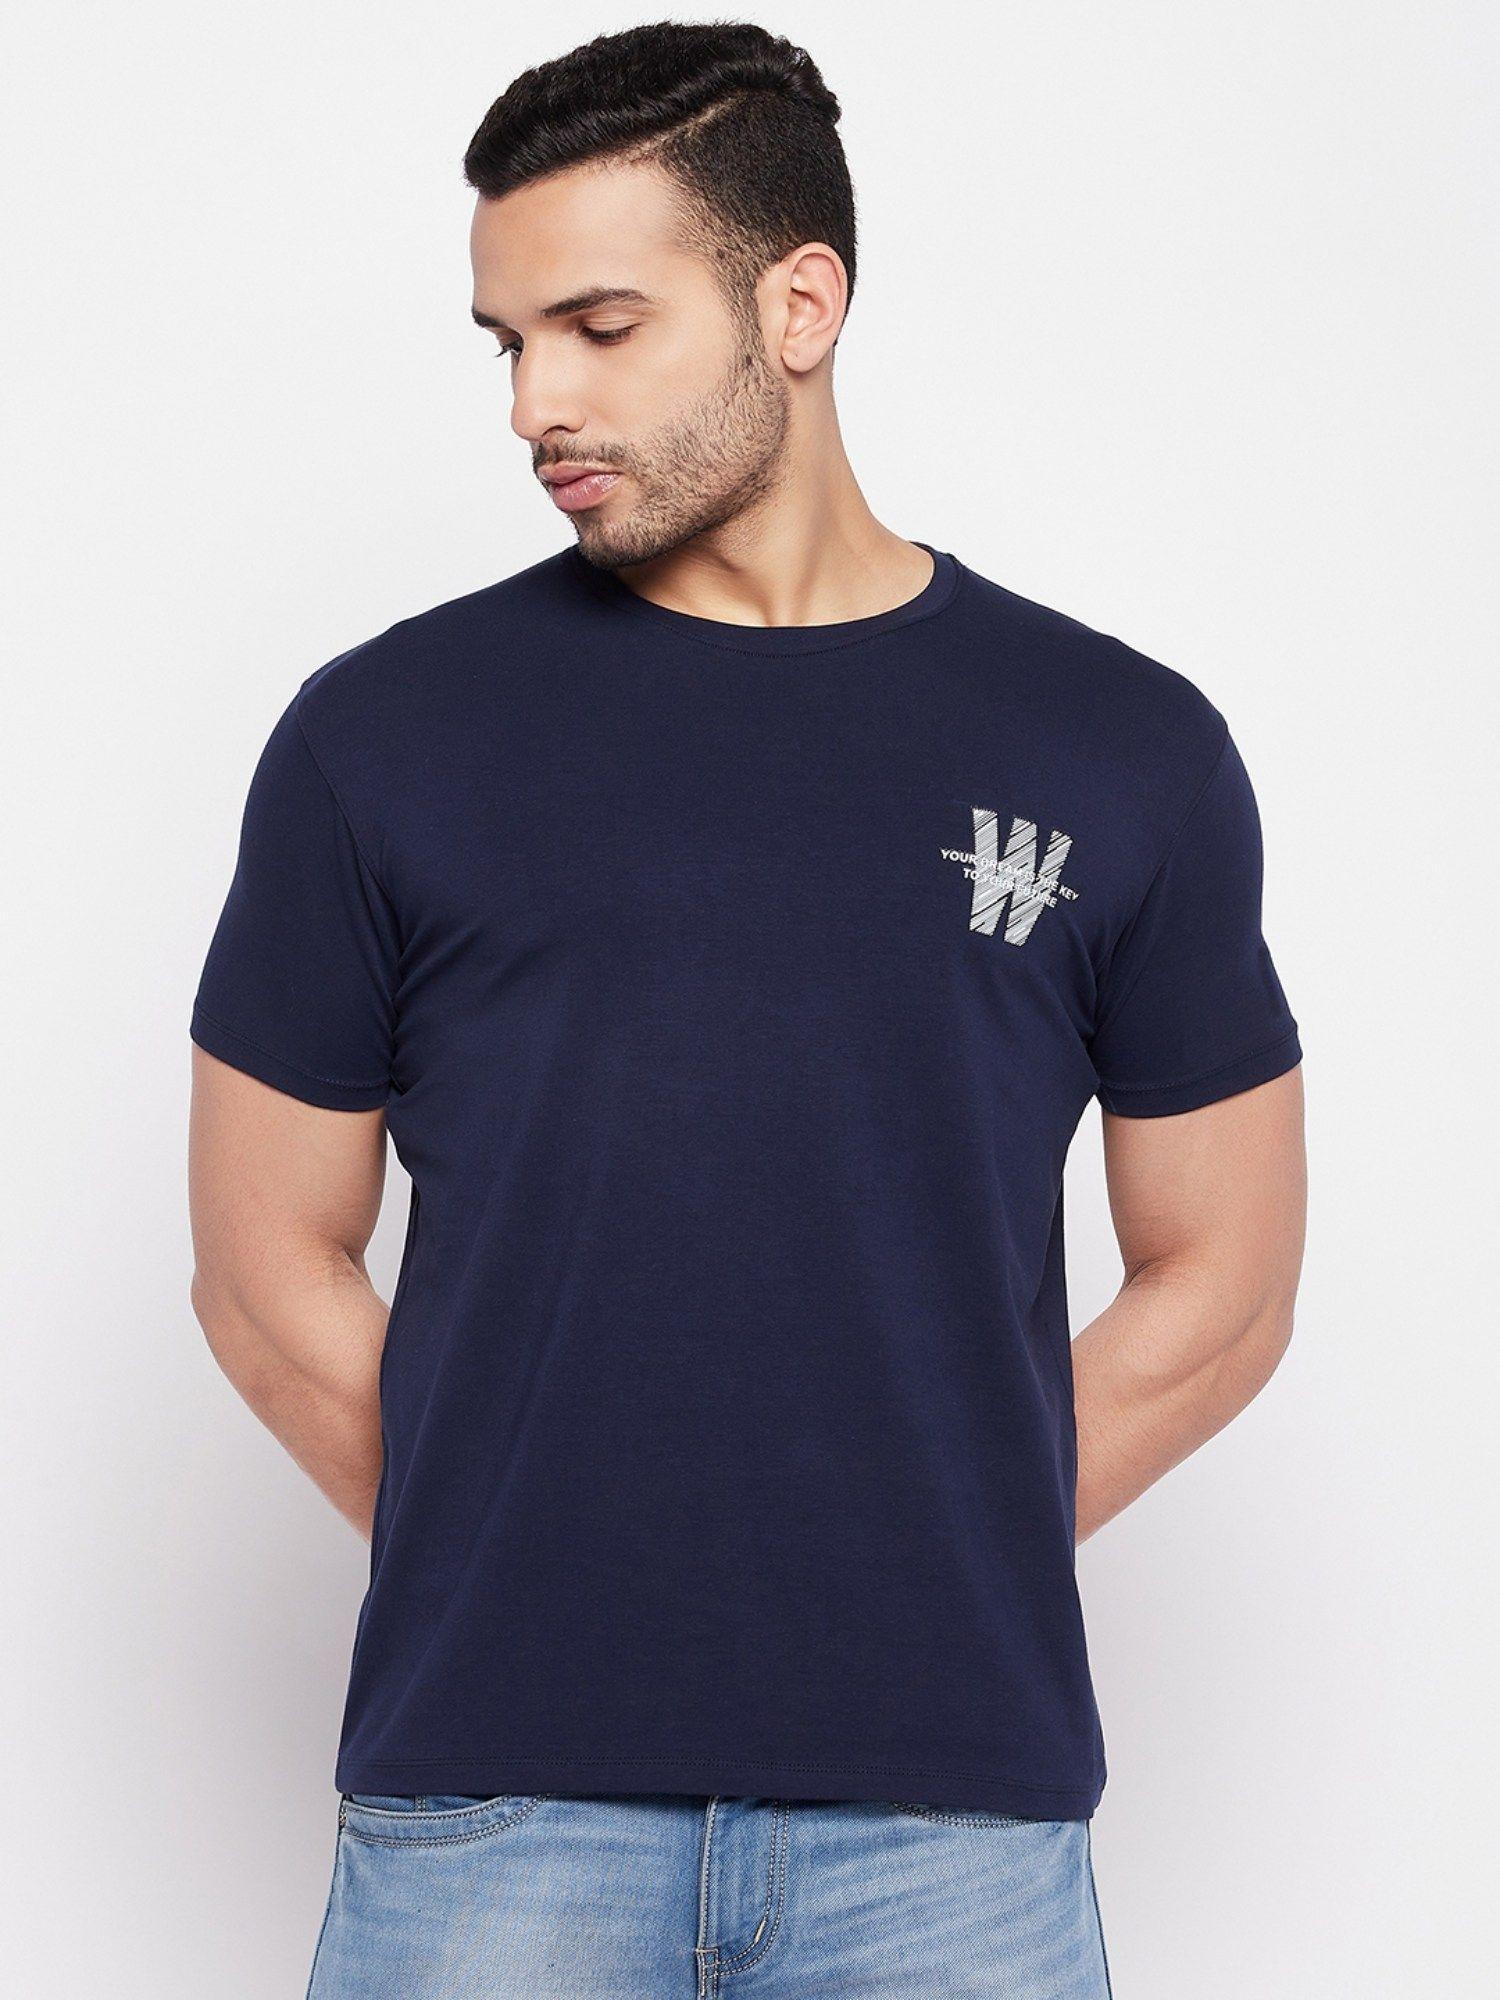 men's navy printed round neck t-shirt